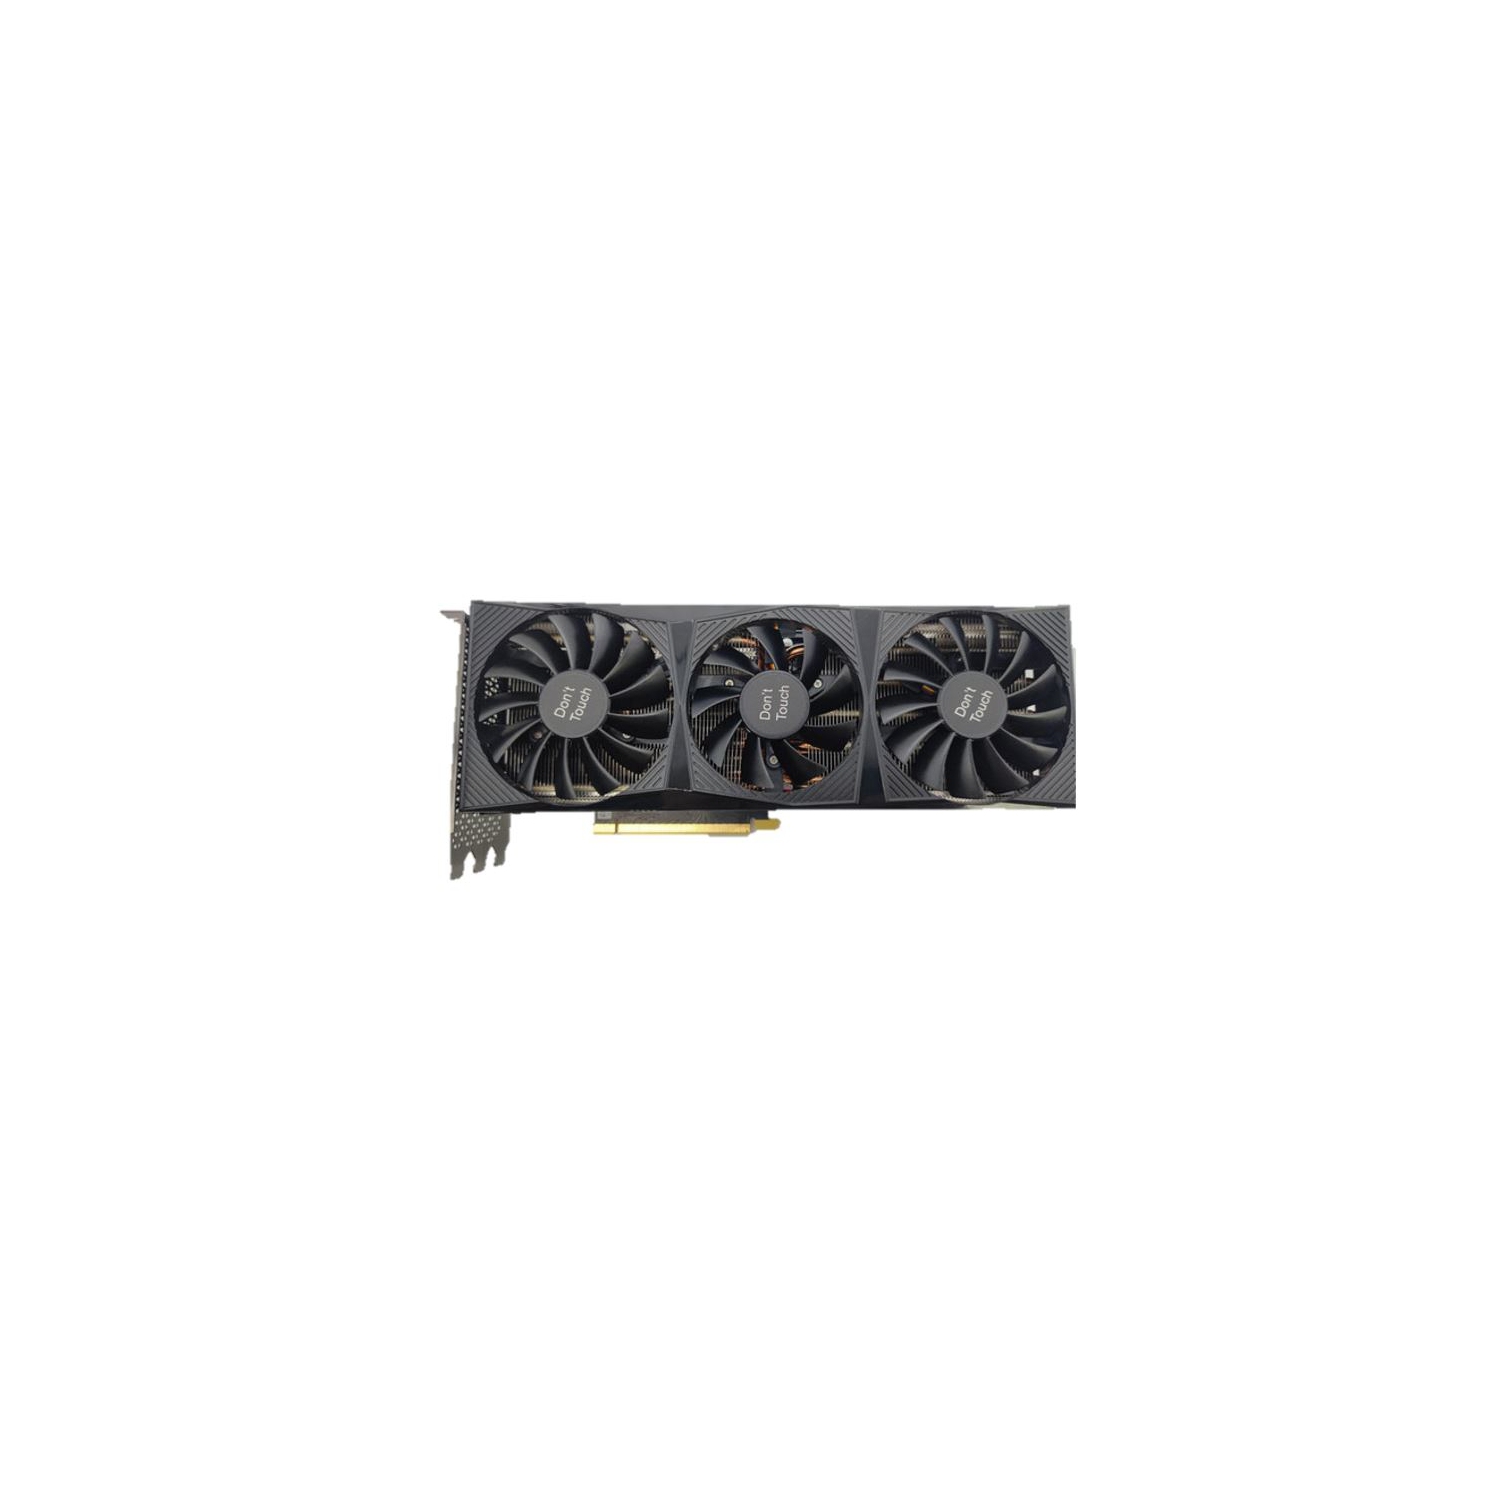 Refurbished (Good) ACER NVIDIA GeForce RTX 3080 10GB GDDR6X Graphics Card 288-7N612-020A8